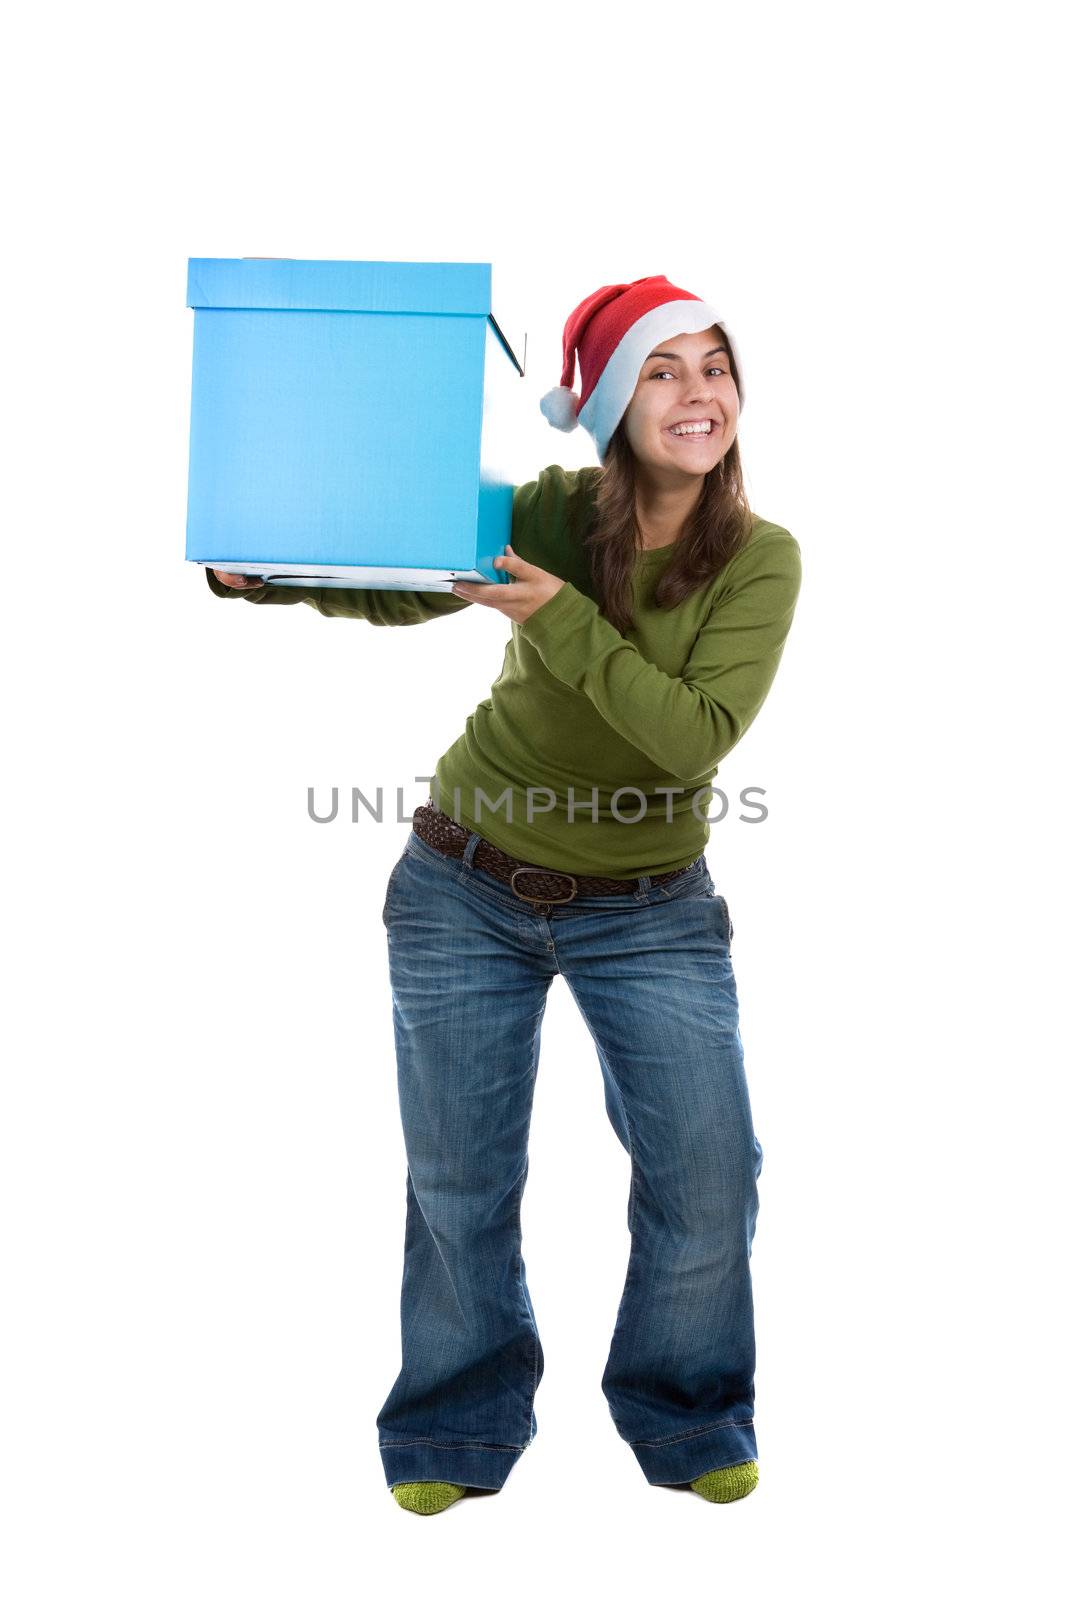 beautiful santa woman celebrating christmas holiday holding big blue present box. isolated on white background. portrait orientation.